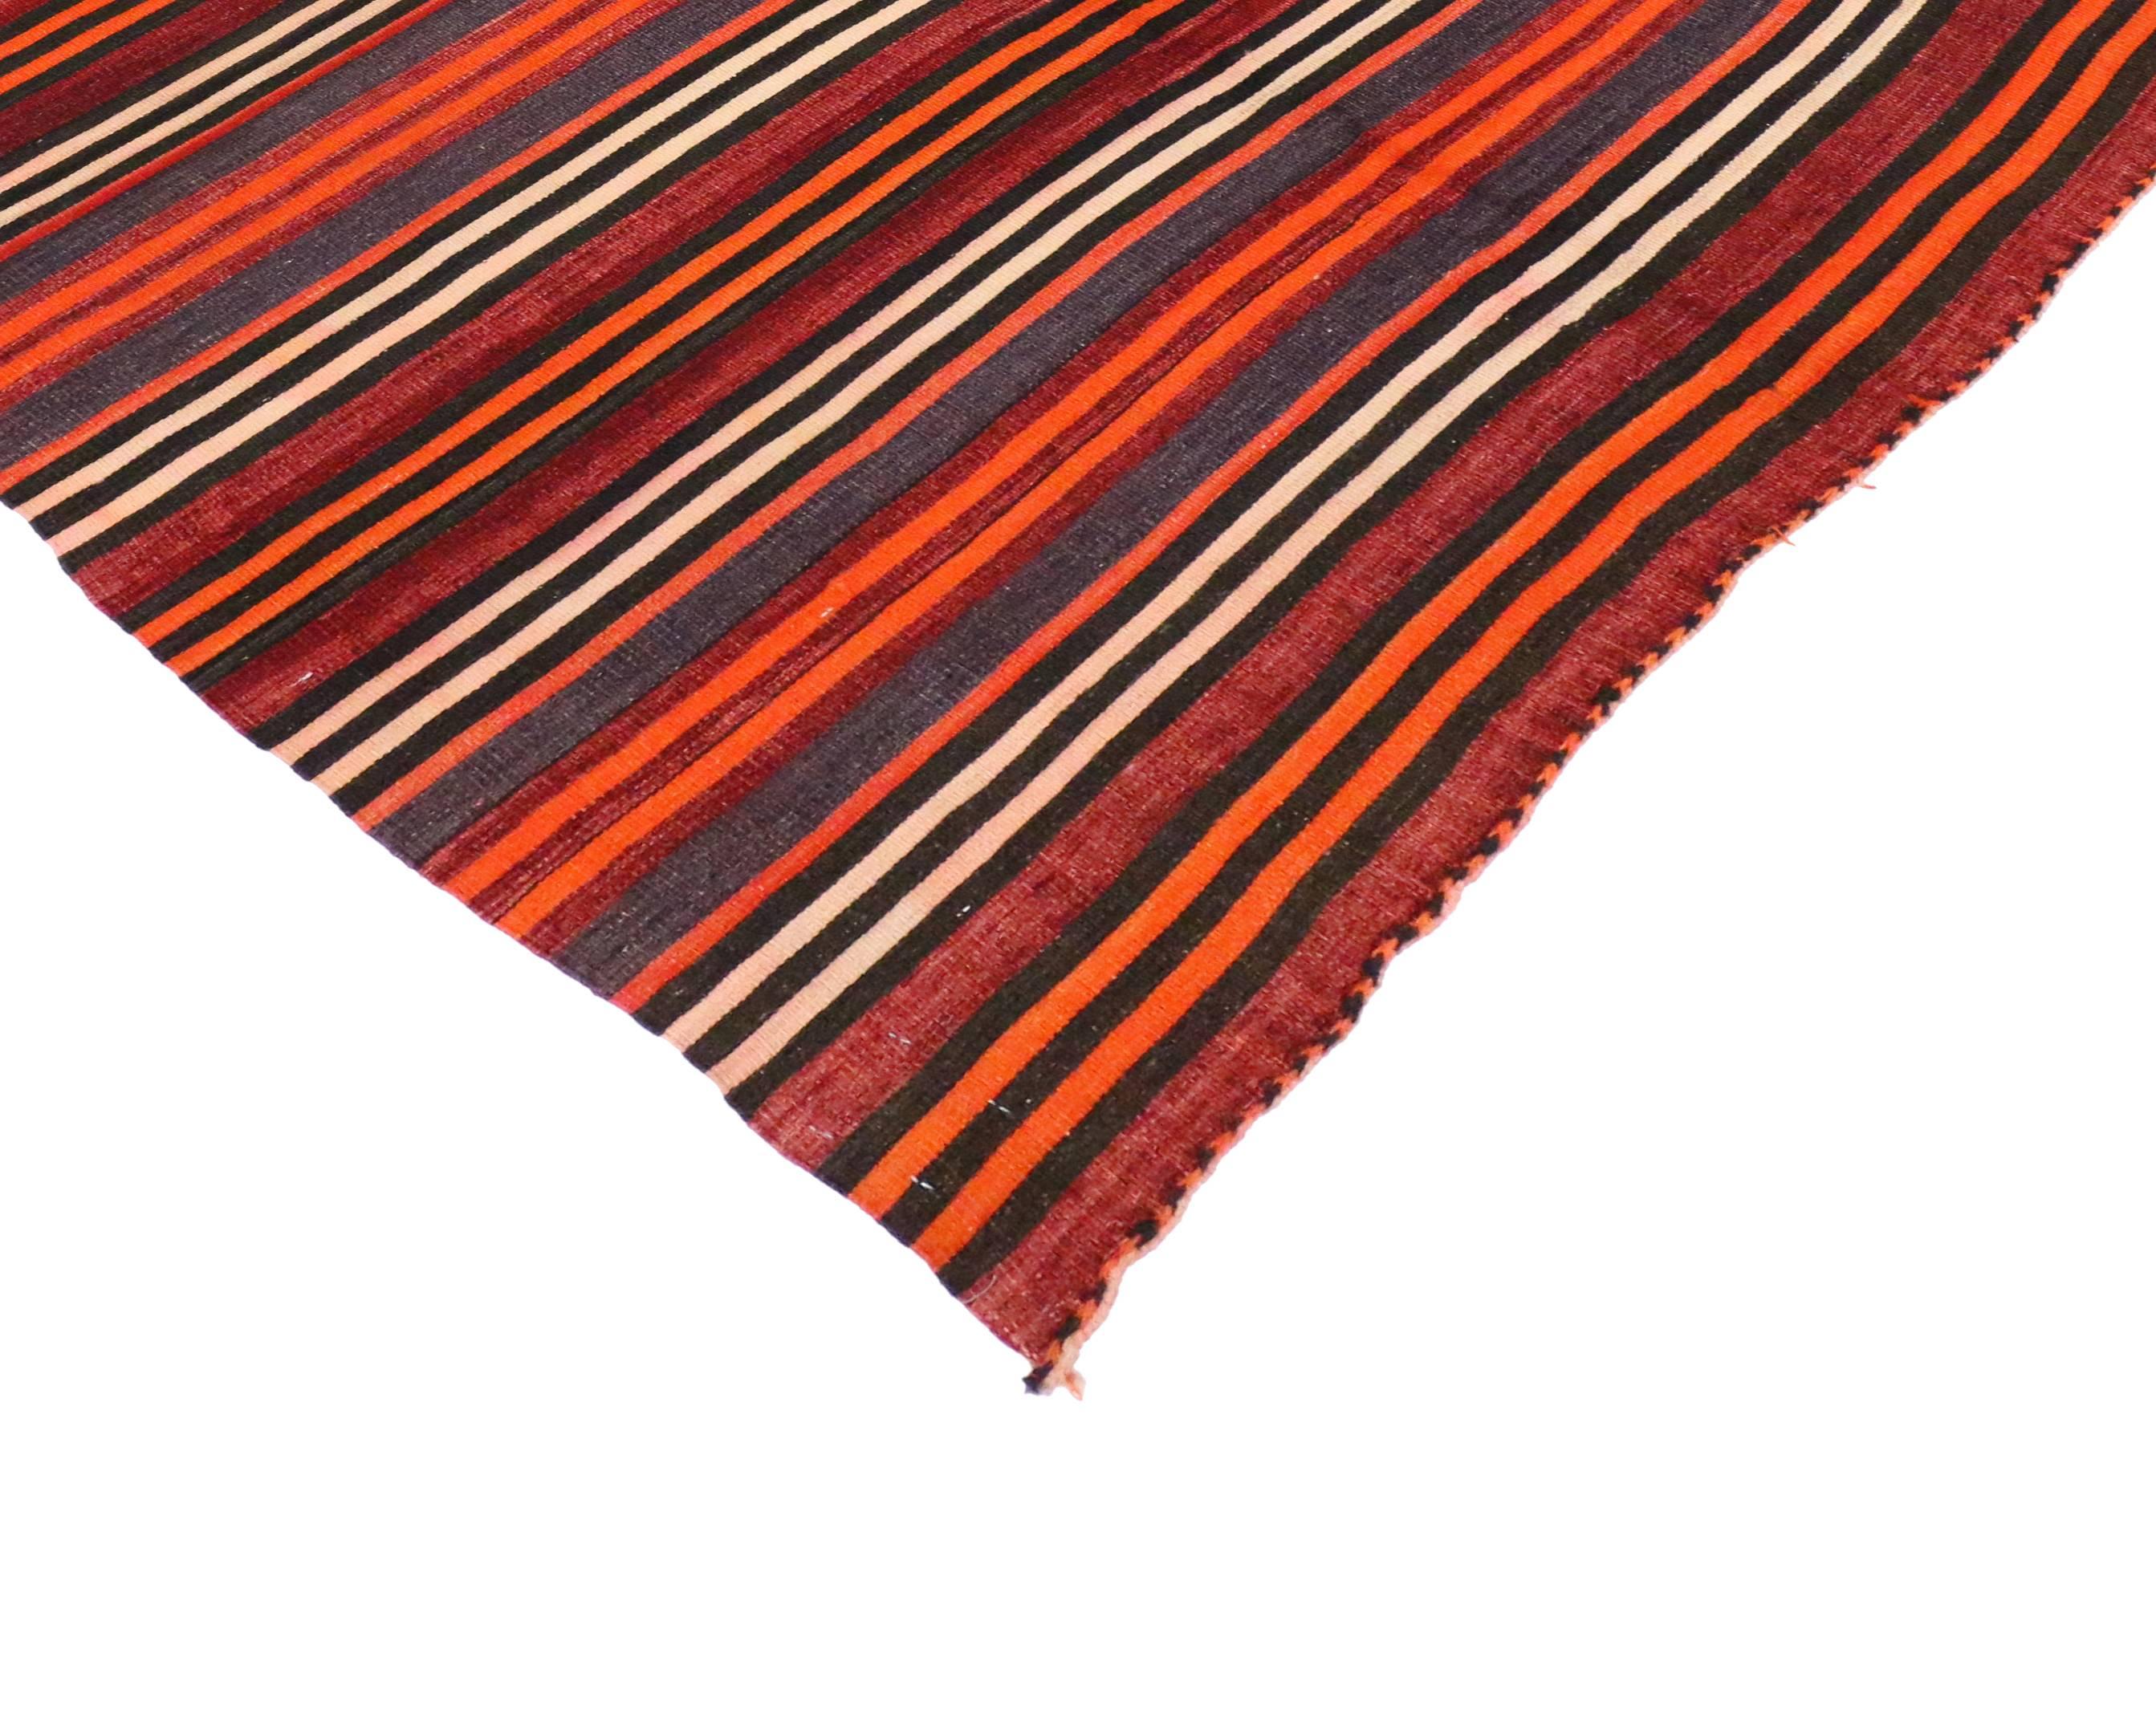 Hand-Woven Vintage Turkish Kilim Rug with Stripes, Flat-Weave Kilim